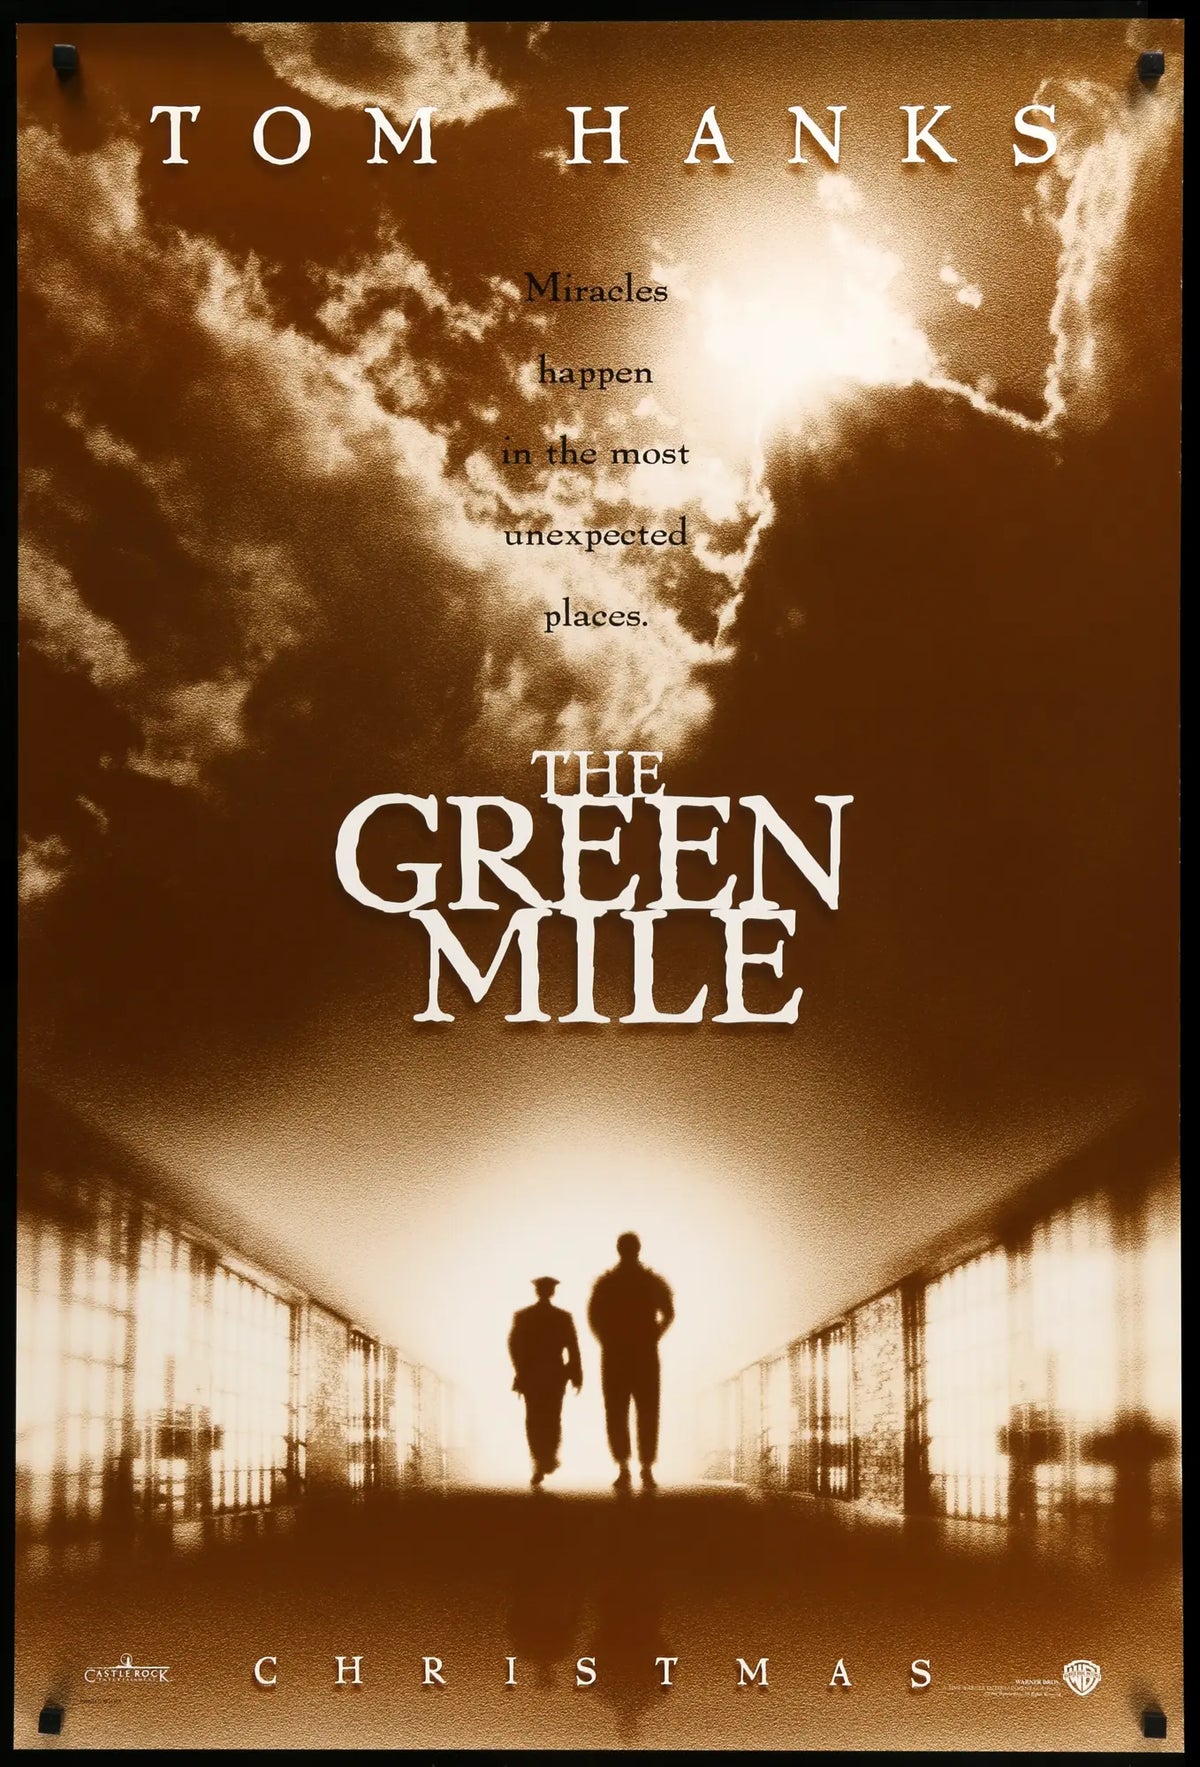 Green Mile (1999) original movie poster for sale at Original Film Art